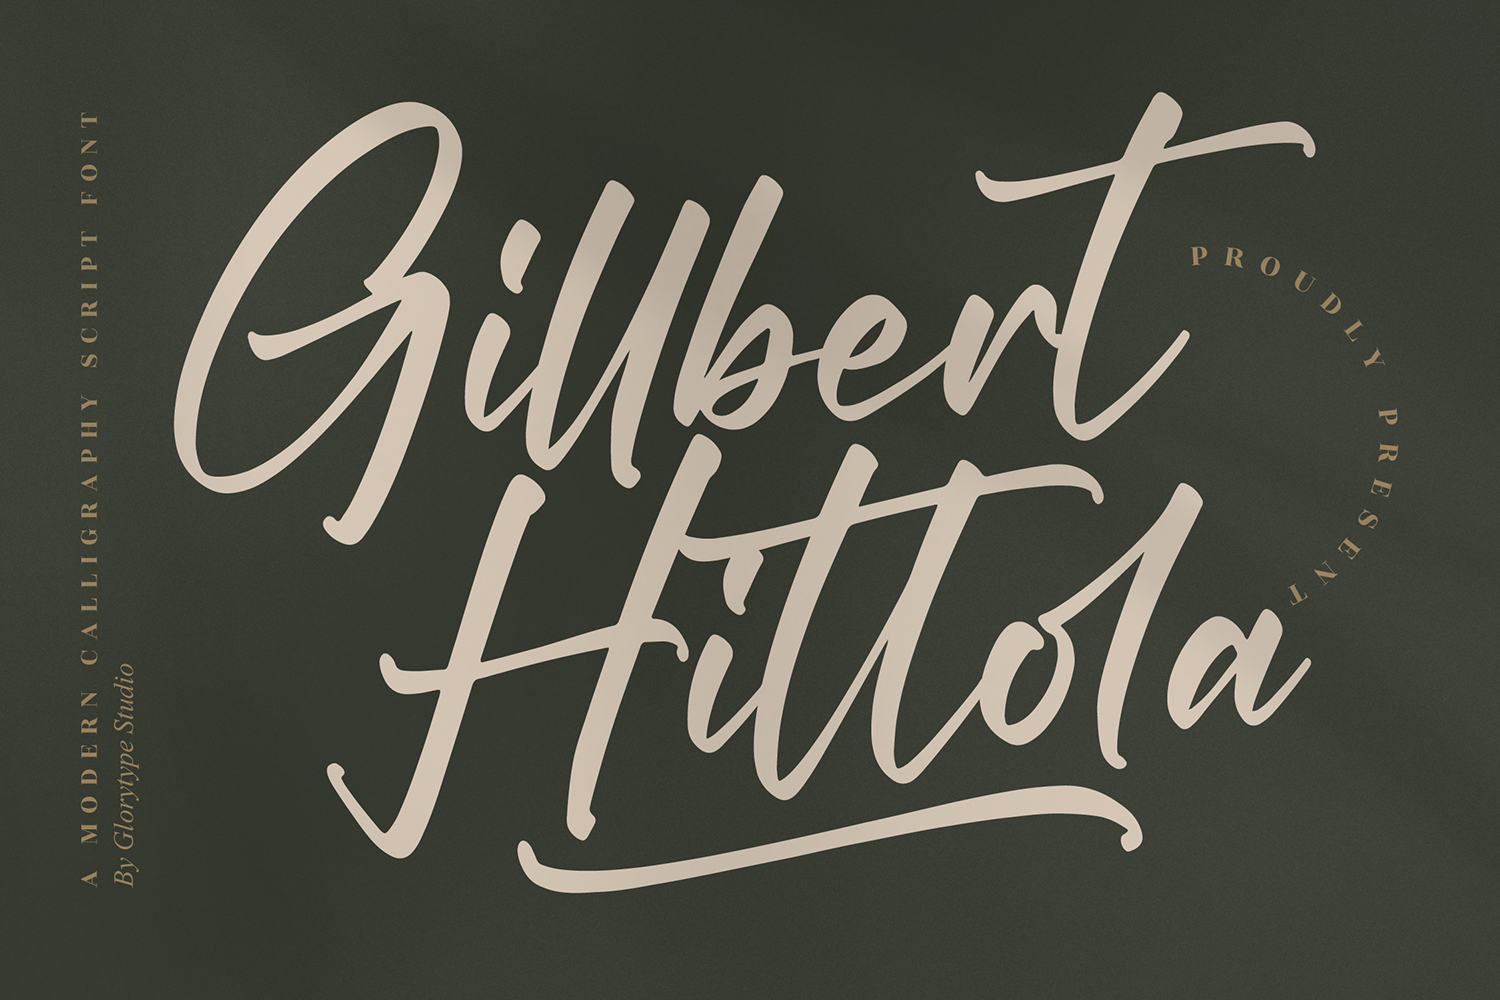 Gillbert Hittola Free Font